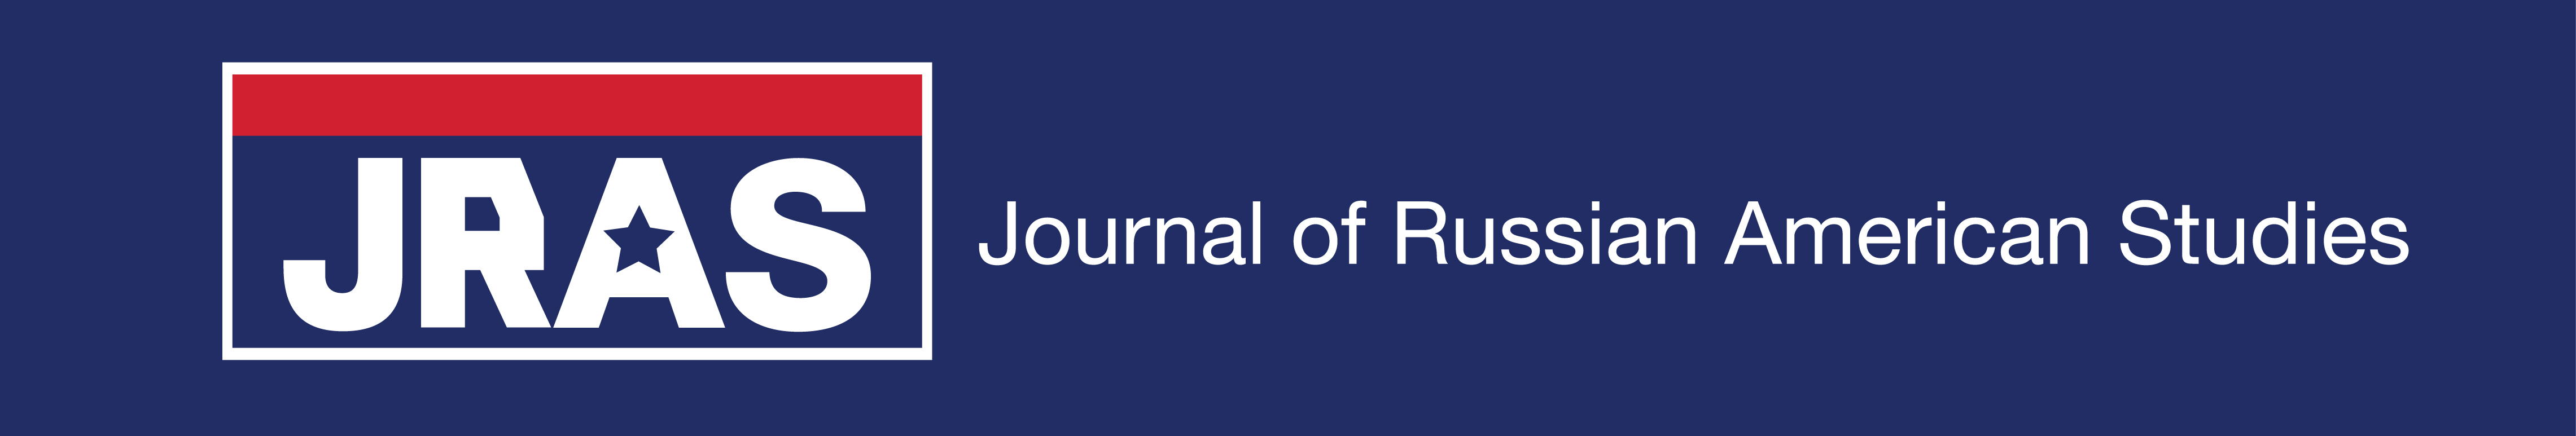 Journal of Russian American Studies logo